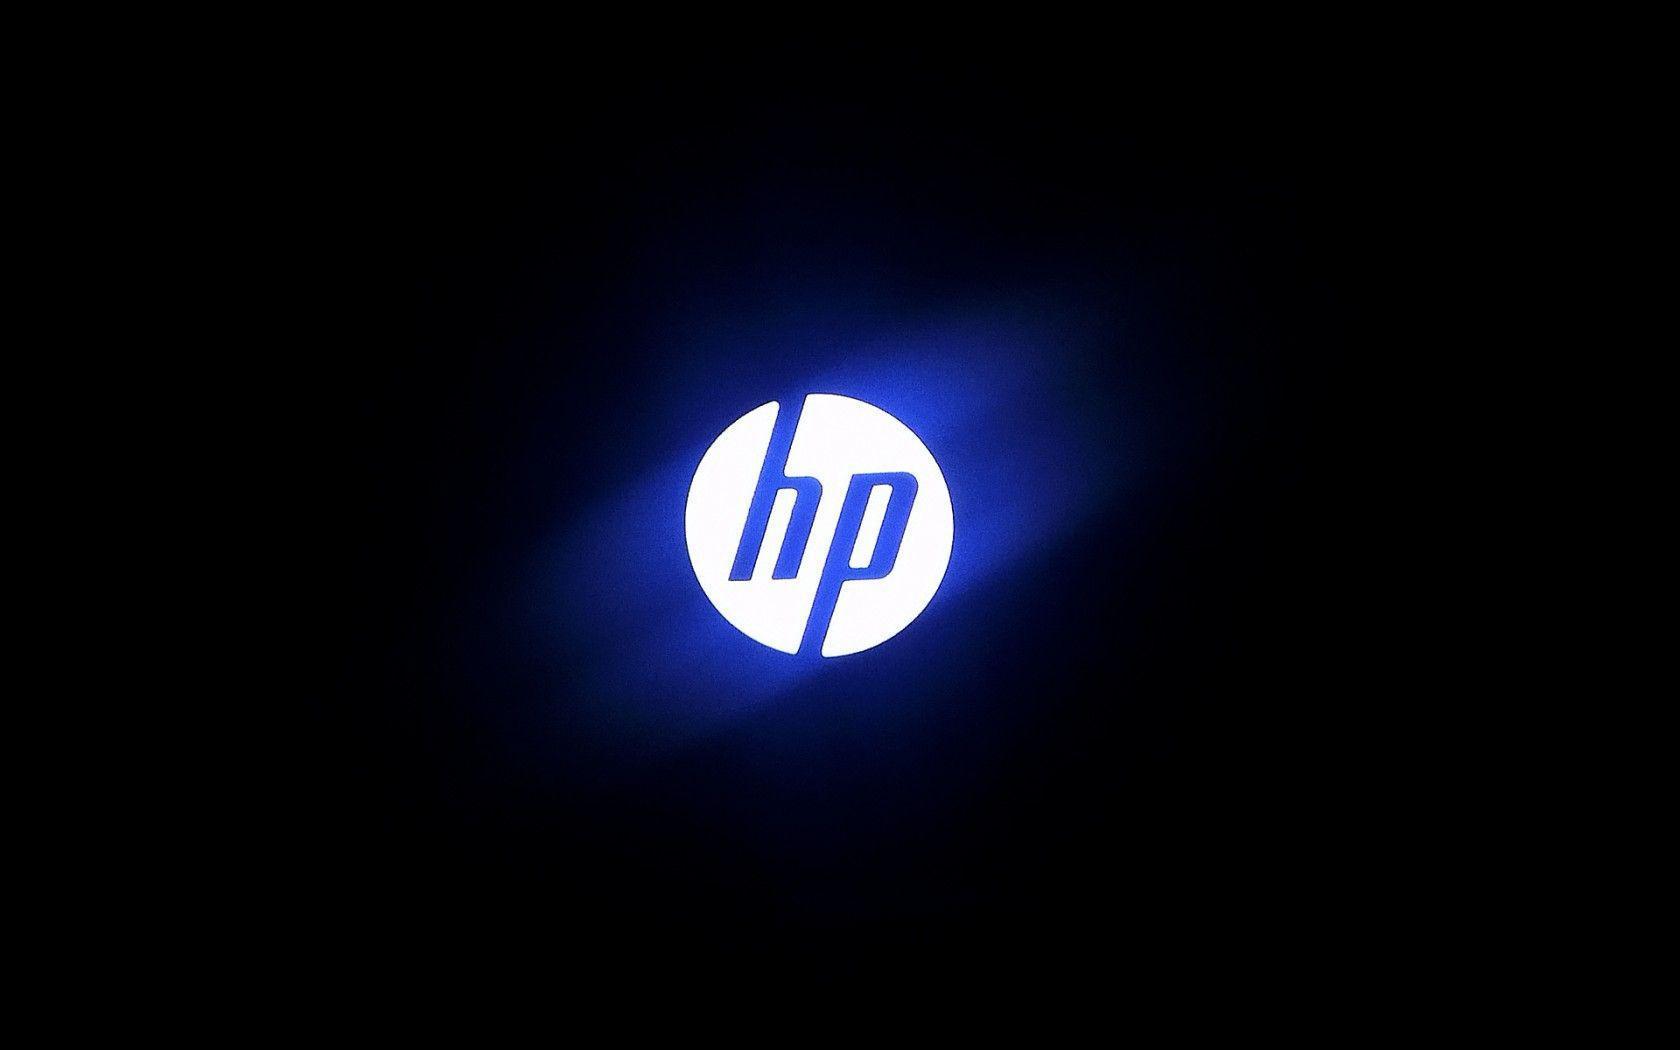 HP Logo Laptop Windows 8 Wallpaper Wallpaper